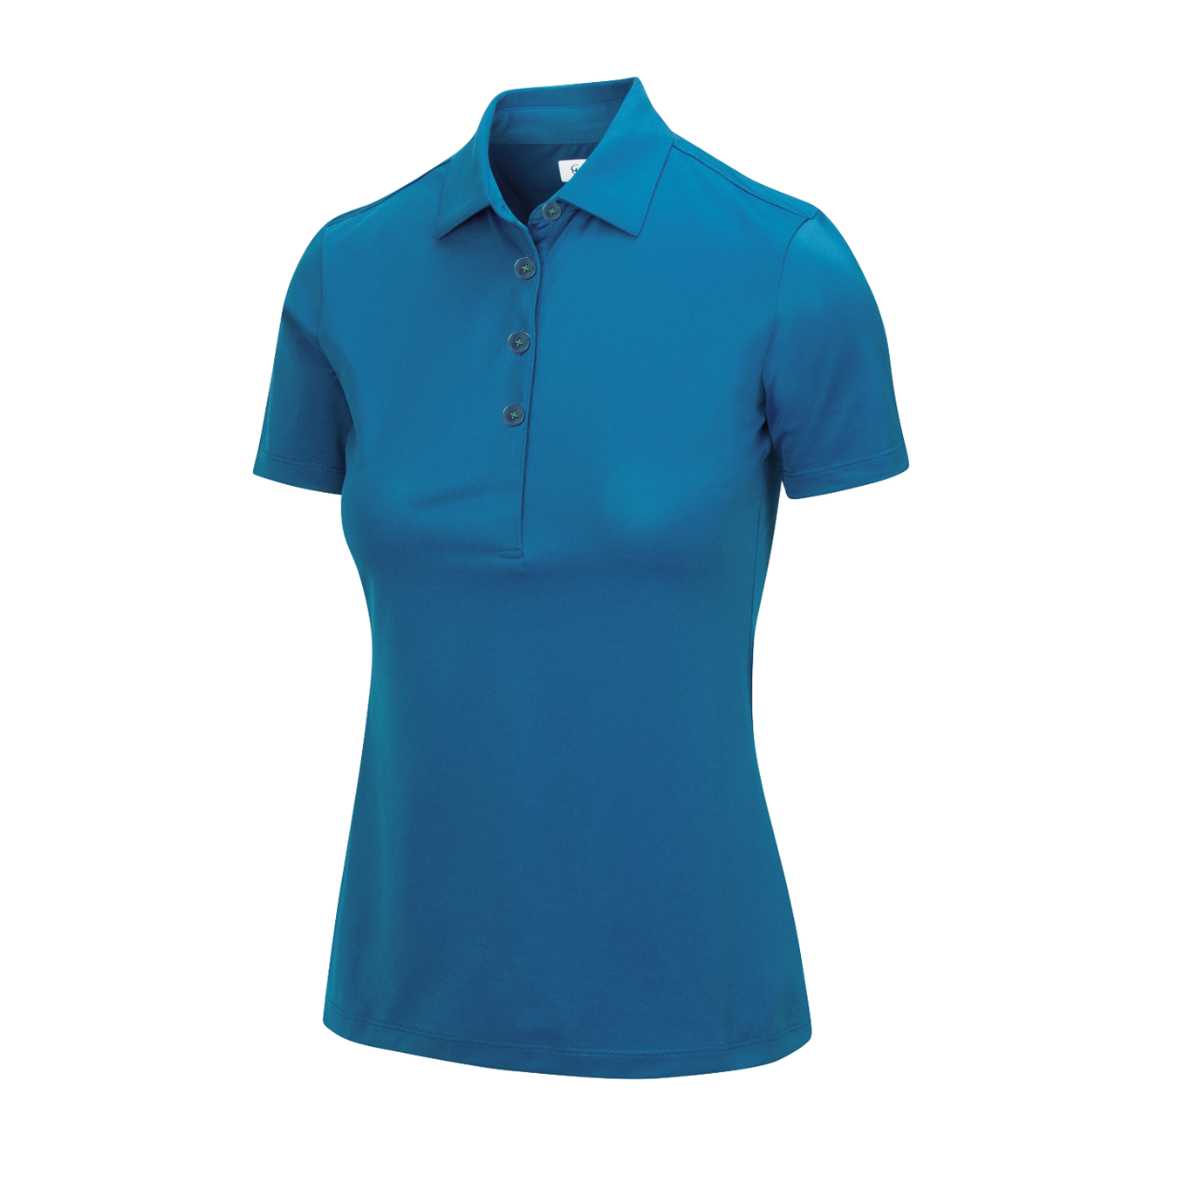 Greg Norman Women's Polo Tshirt (US Size)